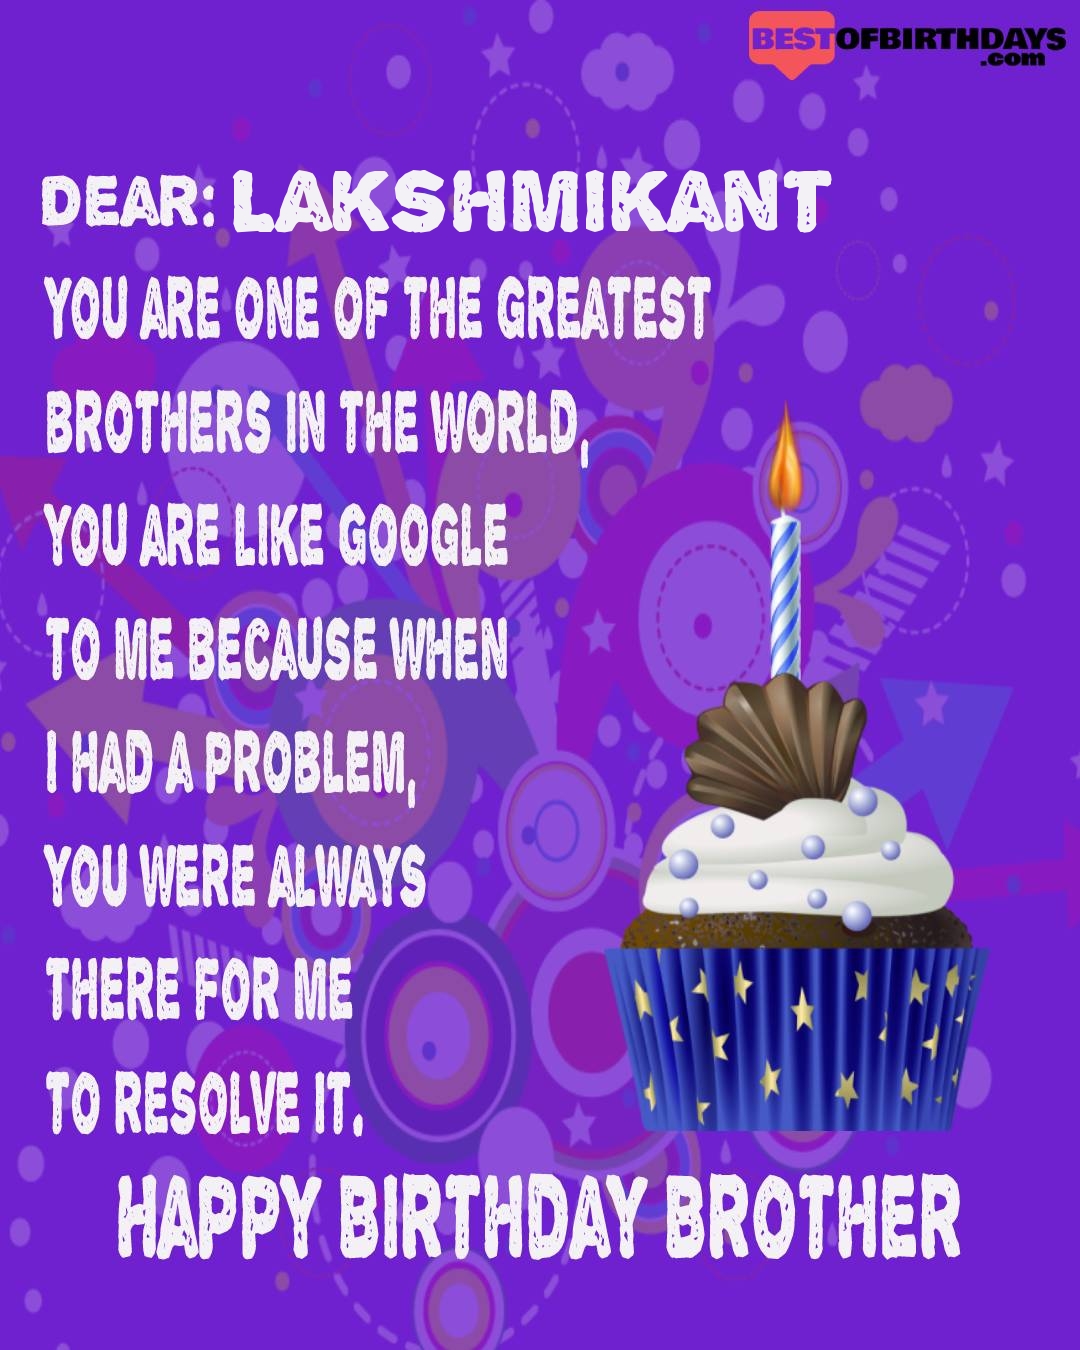 Happy birthday lakshmikant bhai brother bro